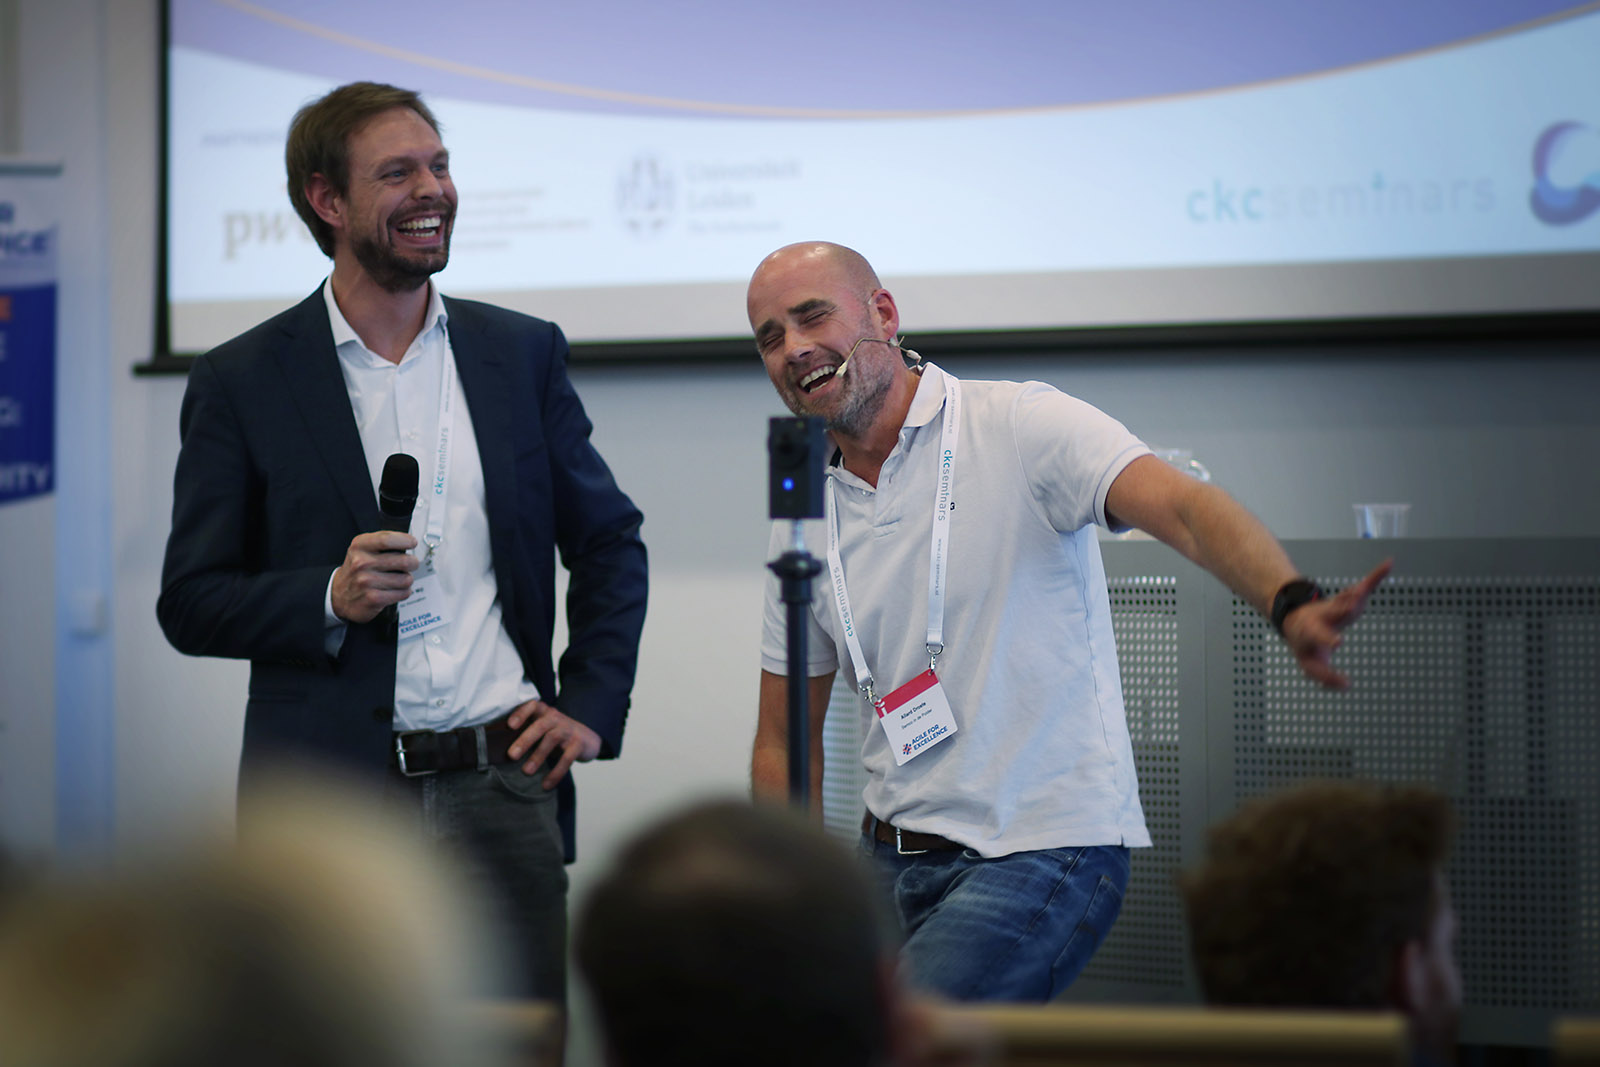 Keynote speaker Allard Droste (right), professional dreamer, entrepreneur and best-selling author of the book ‘Semco in de Polder’ with CFI colleague Jesse van der Mijl.